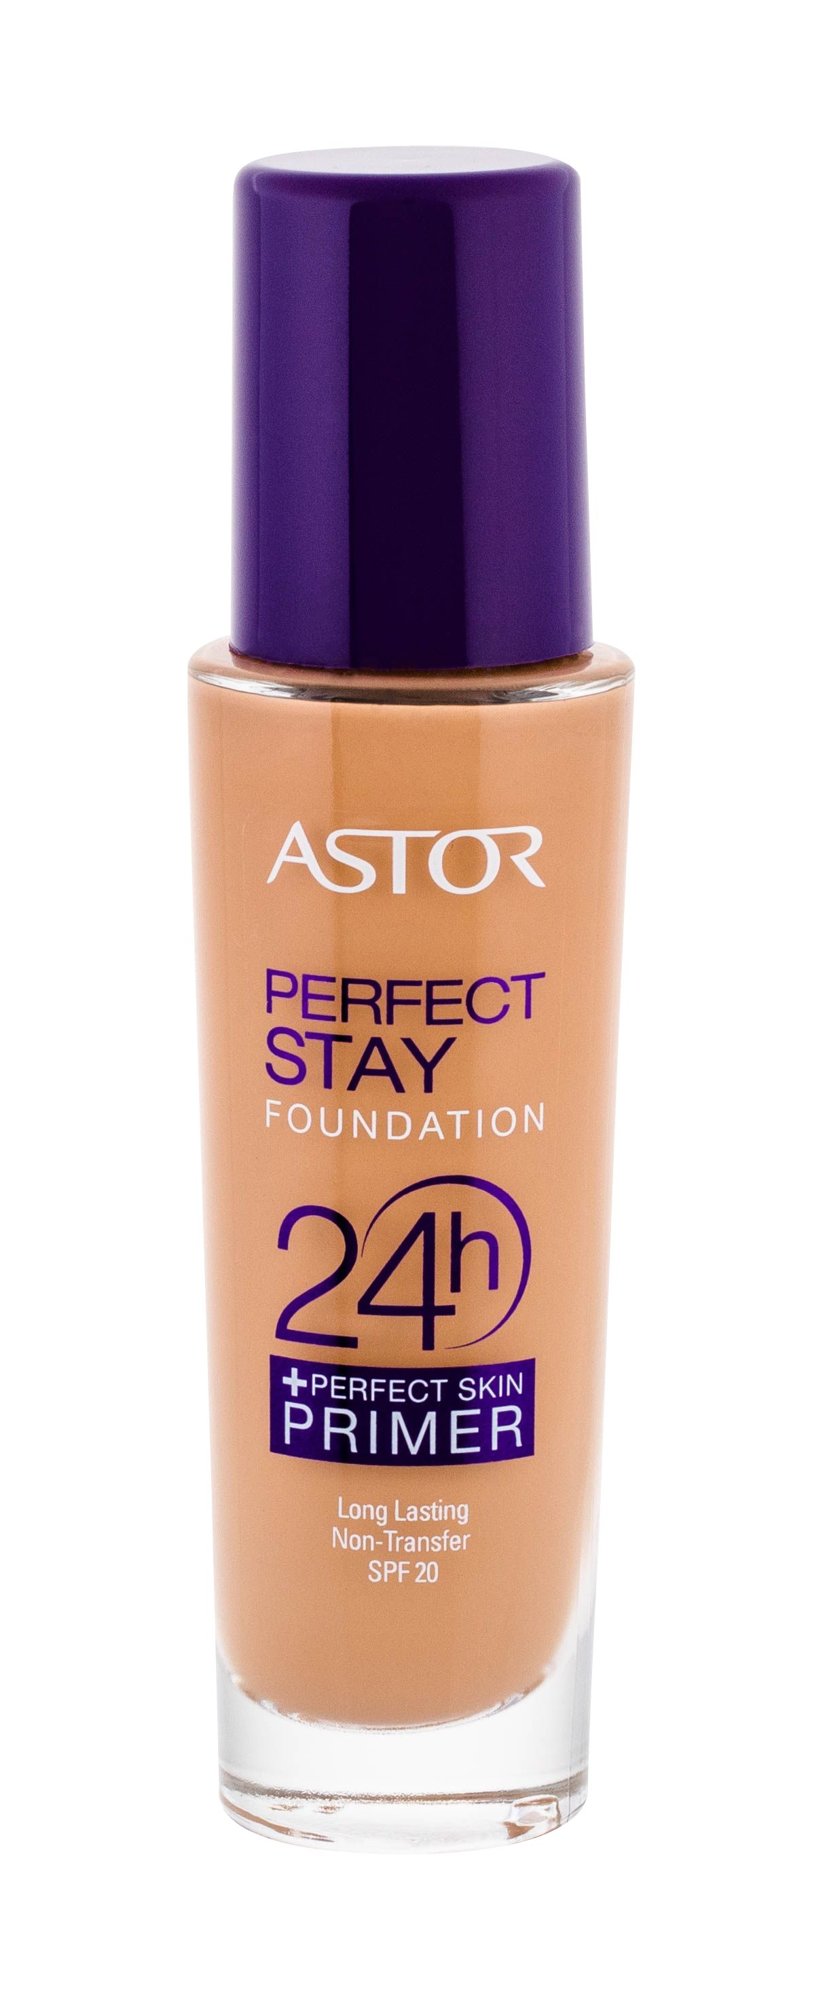 Astor Perfect Stay 24h Foundation + Perfect Skin Primer SPF20 makiažo pagrindas